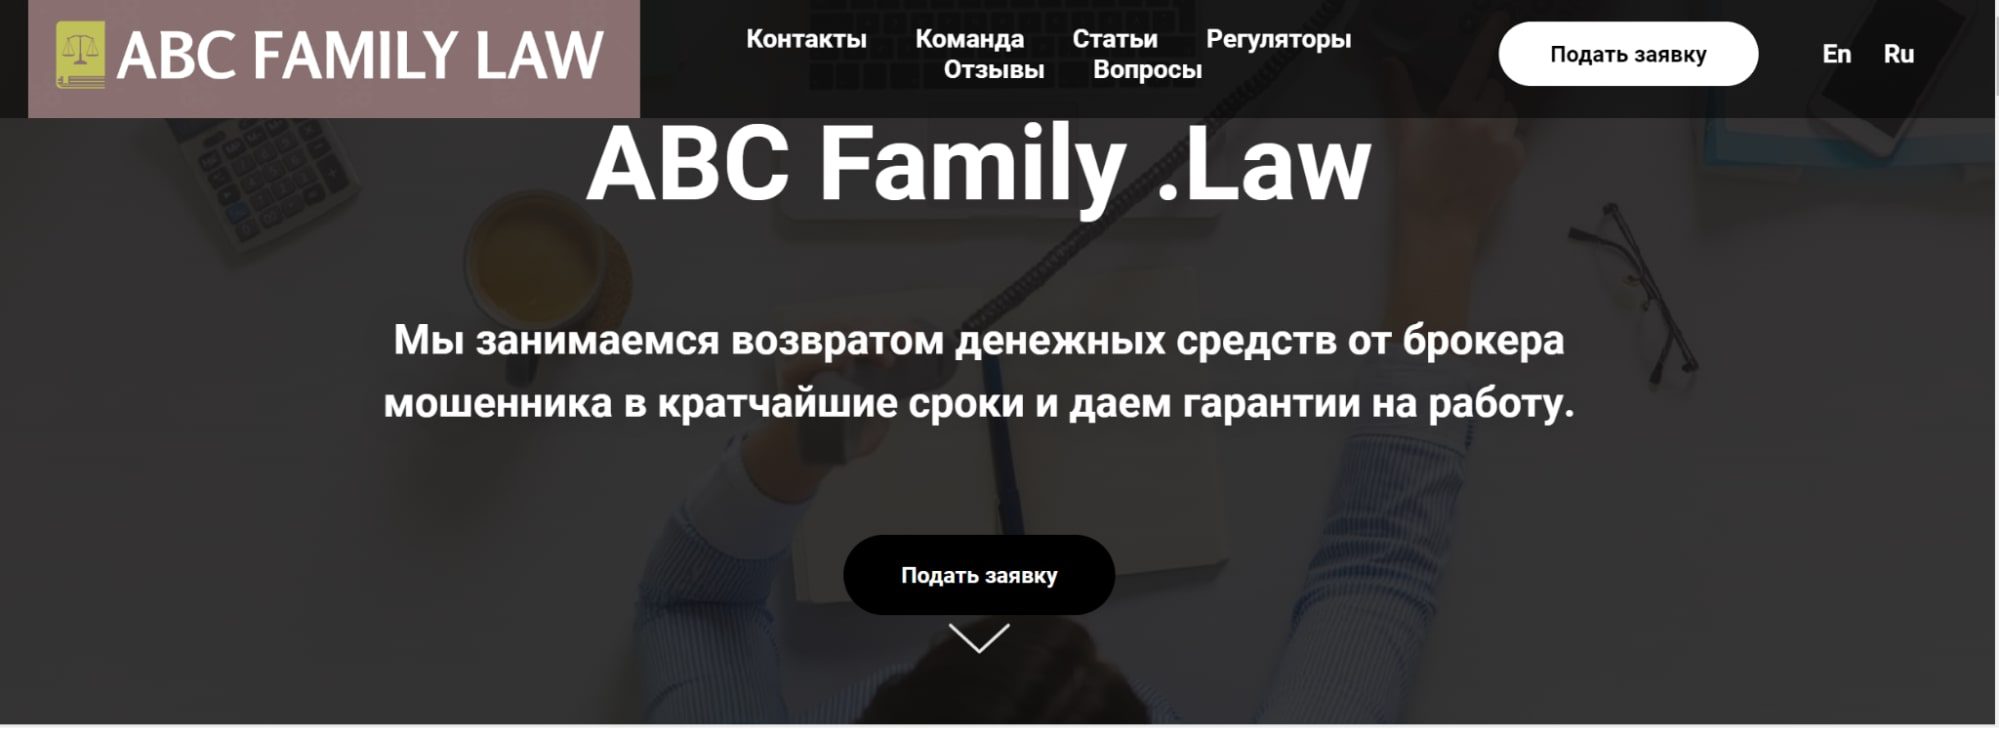 Abc Family Law сайт